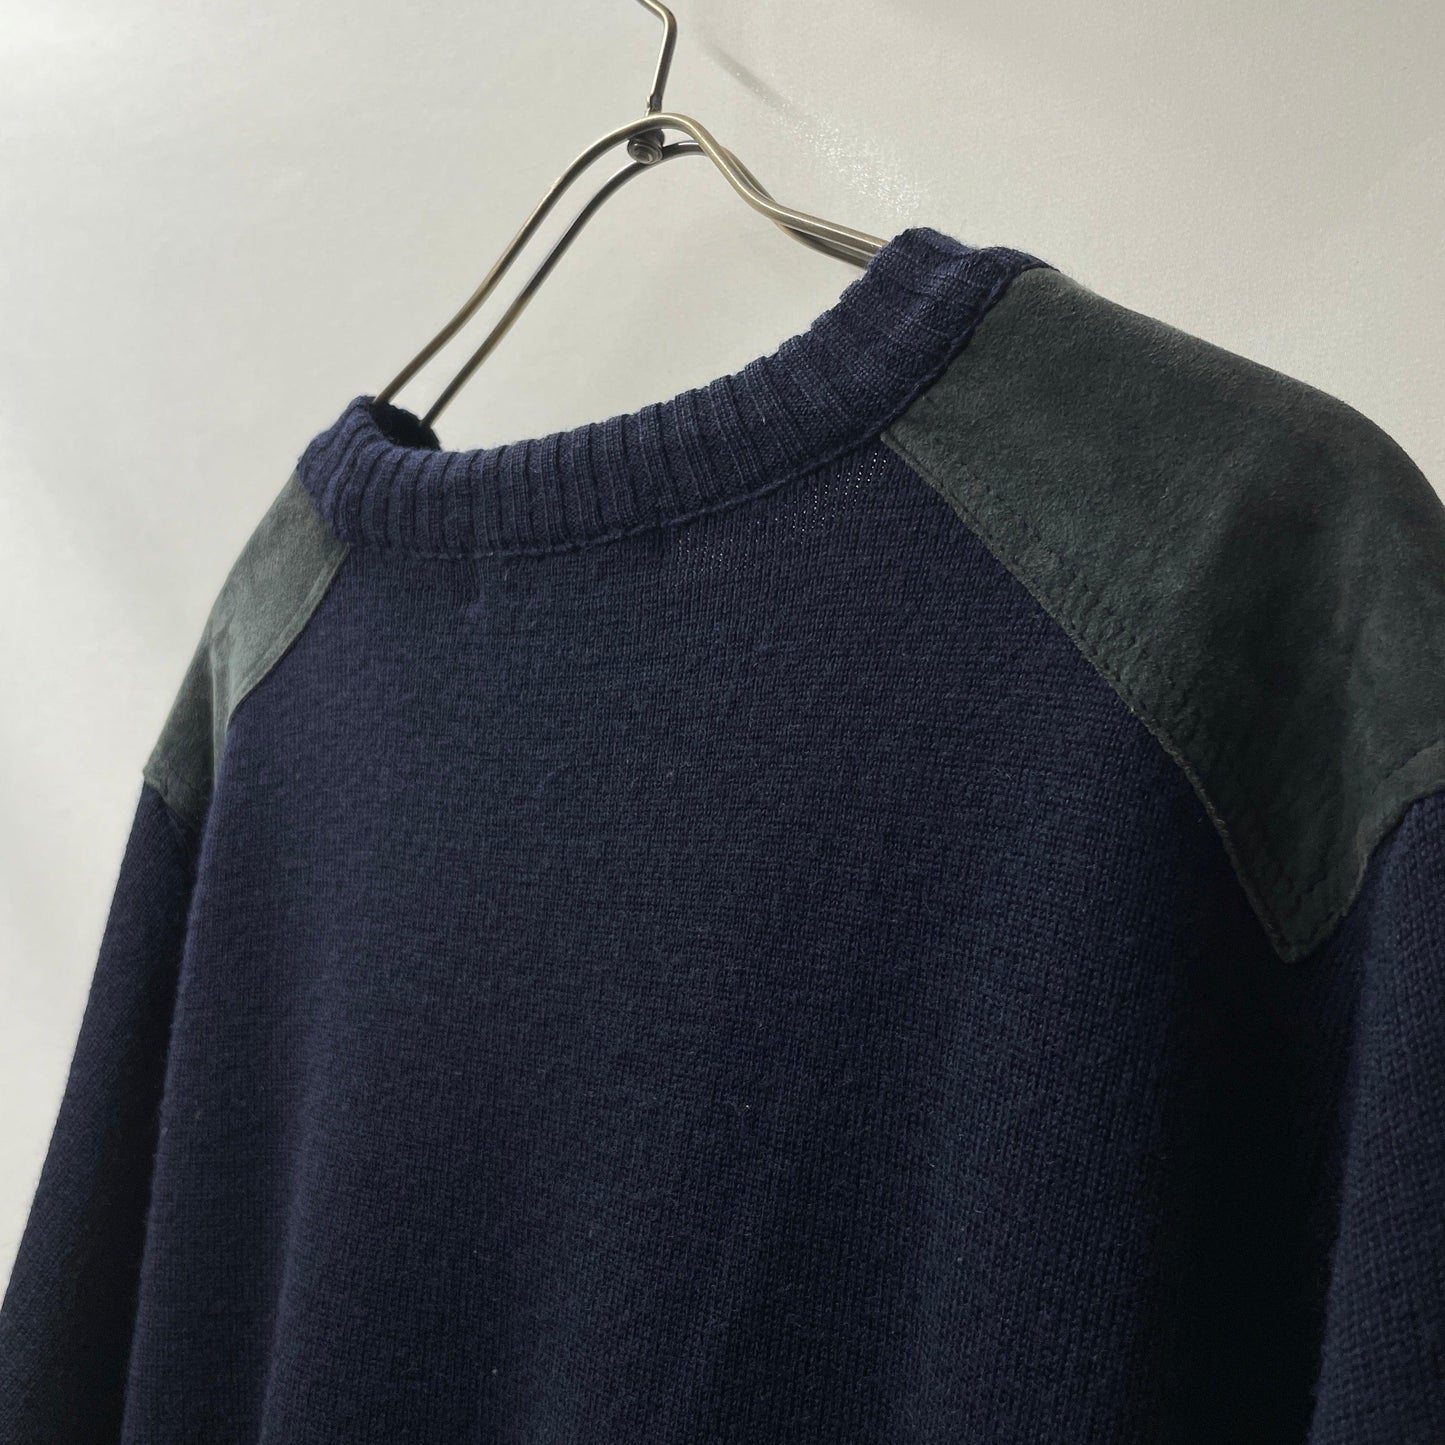 burberrys knit Burberry knit/sweater